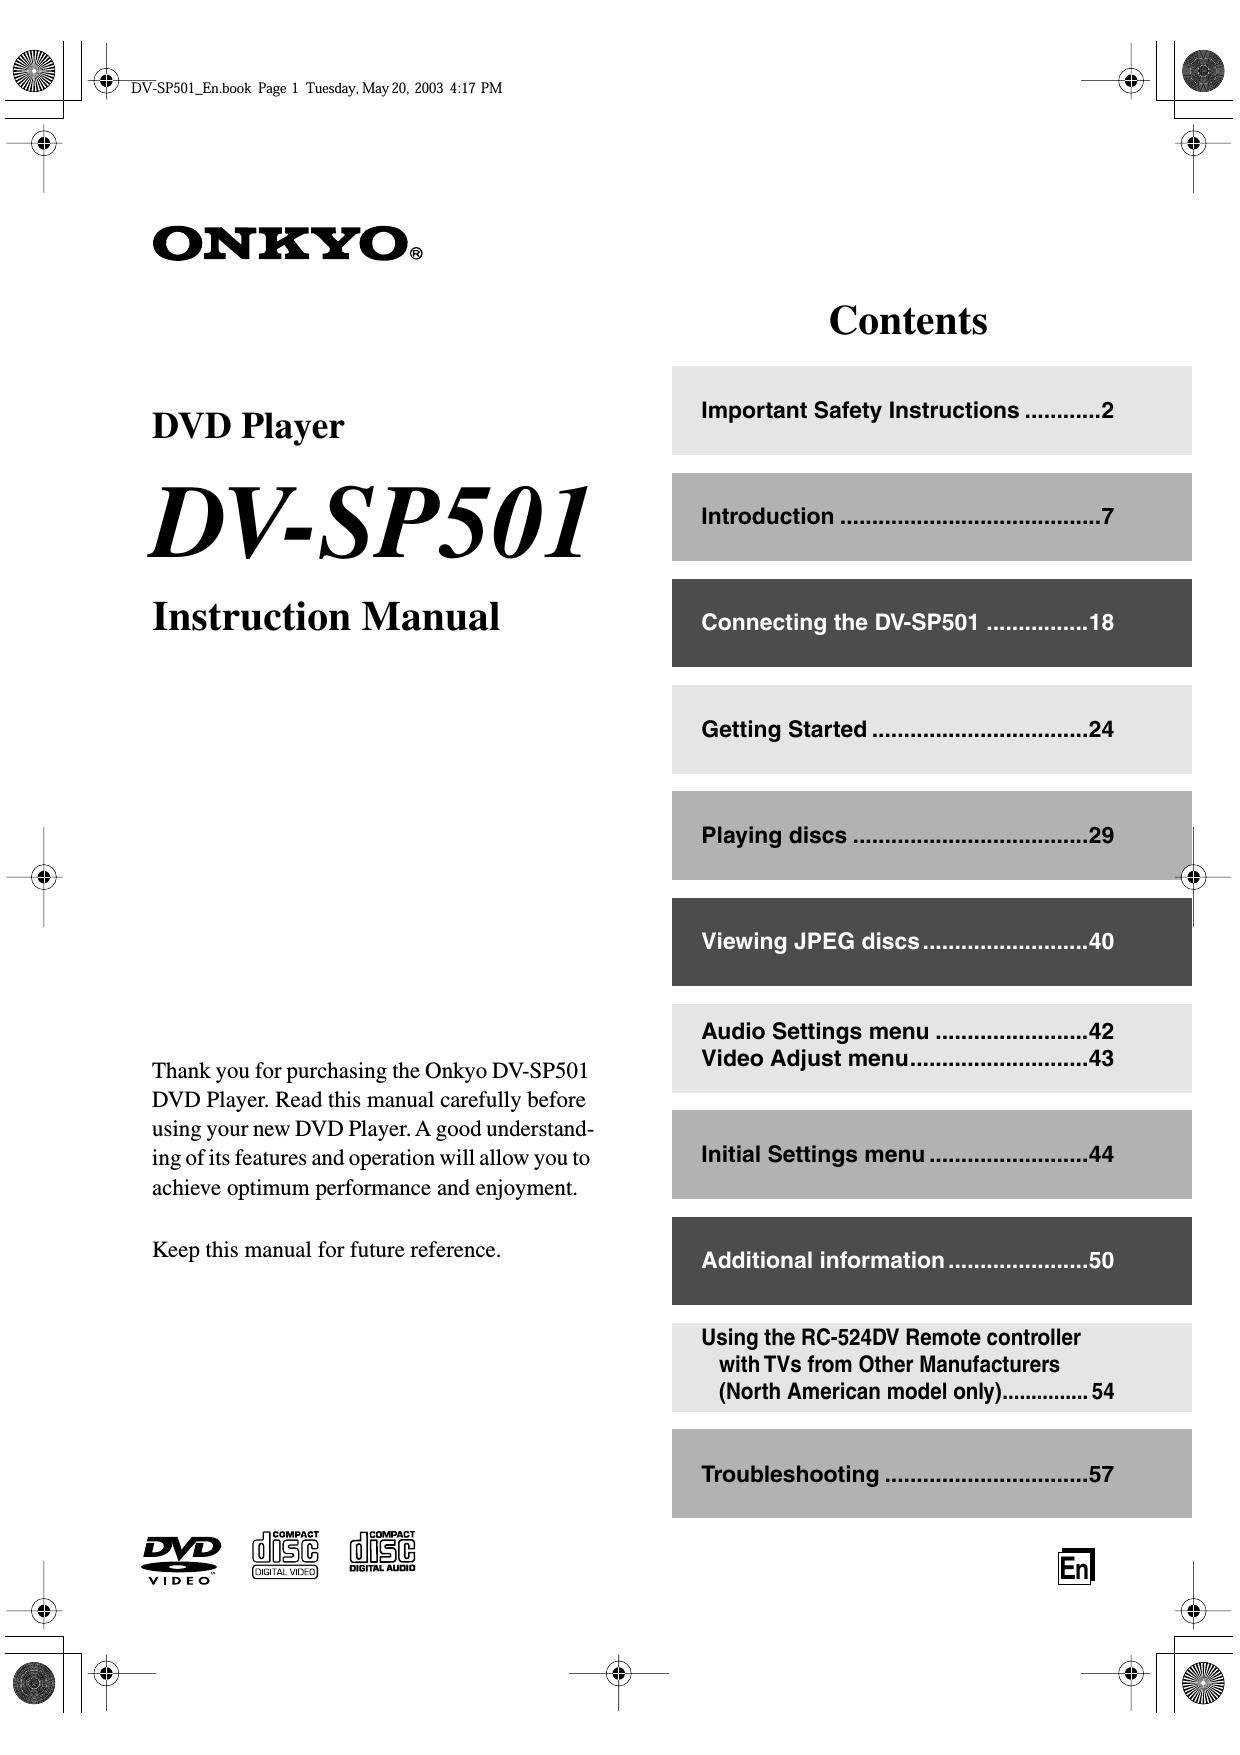 Onkyo DVSP 501 Owners Manual